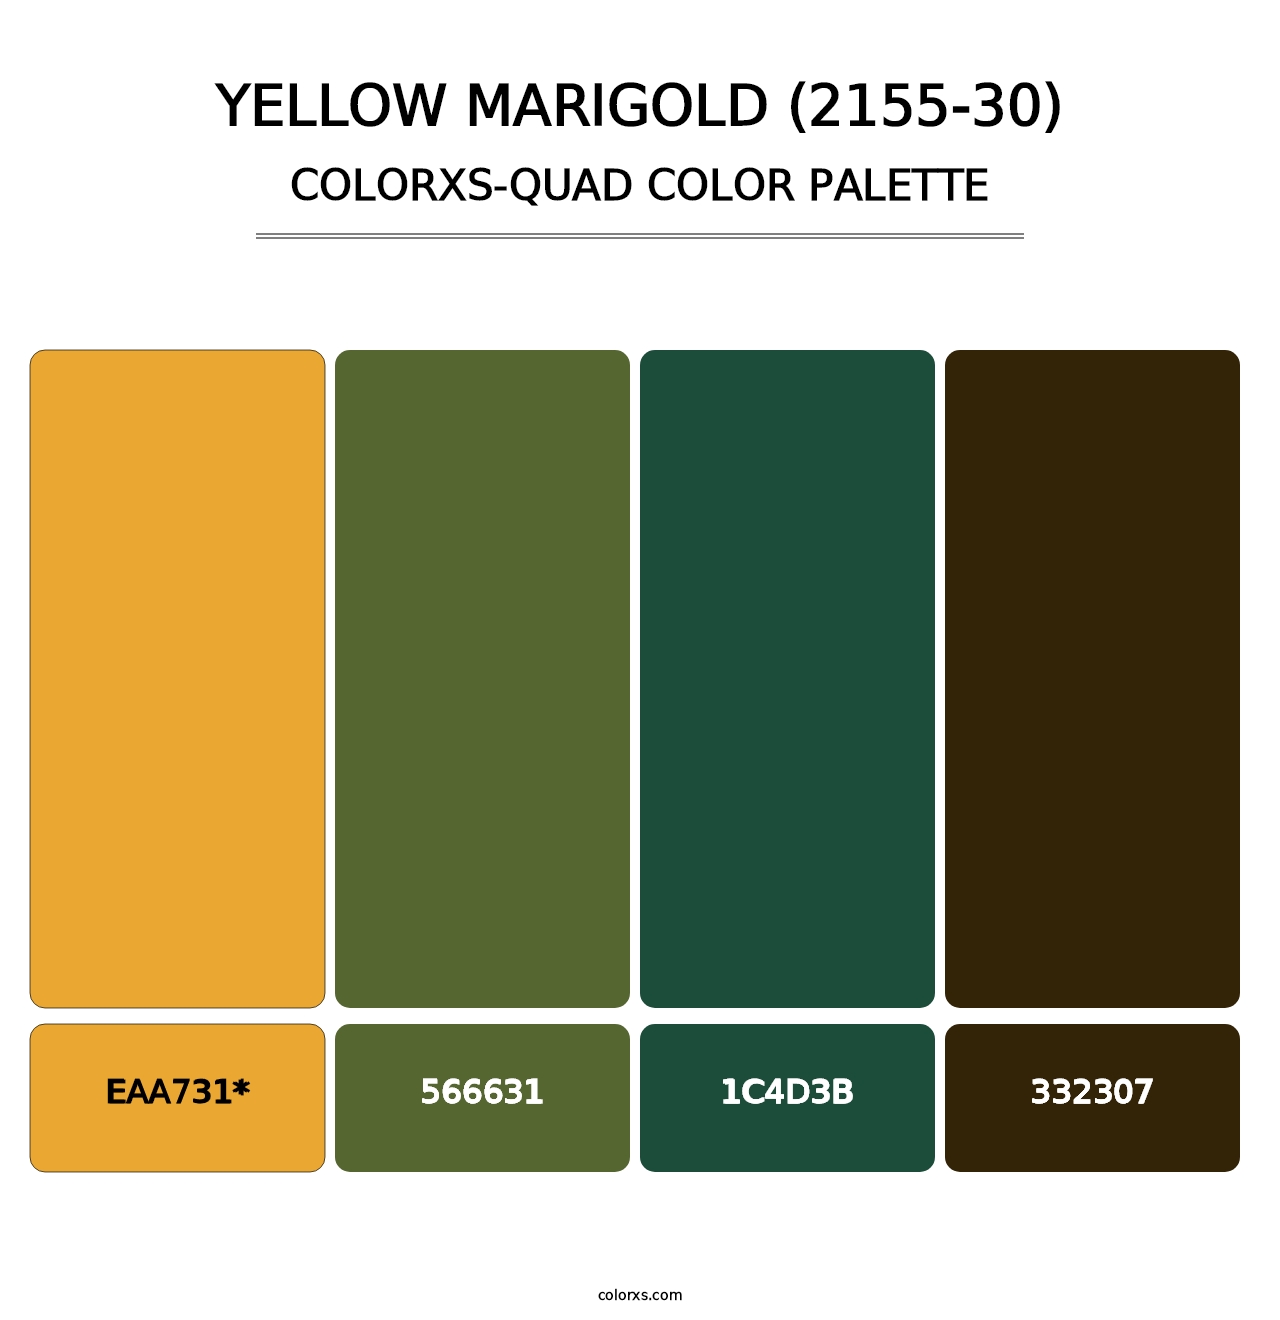 Yellow Marigold (2155-30) - Colorxs Quad Palette